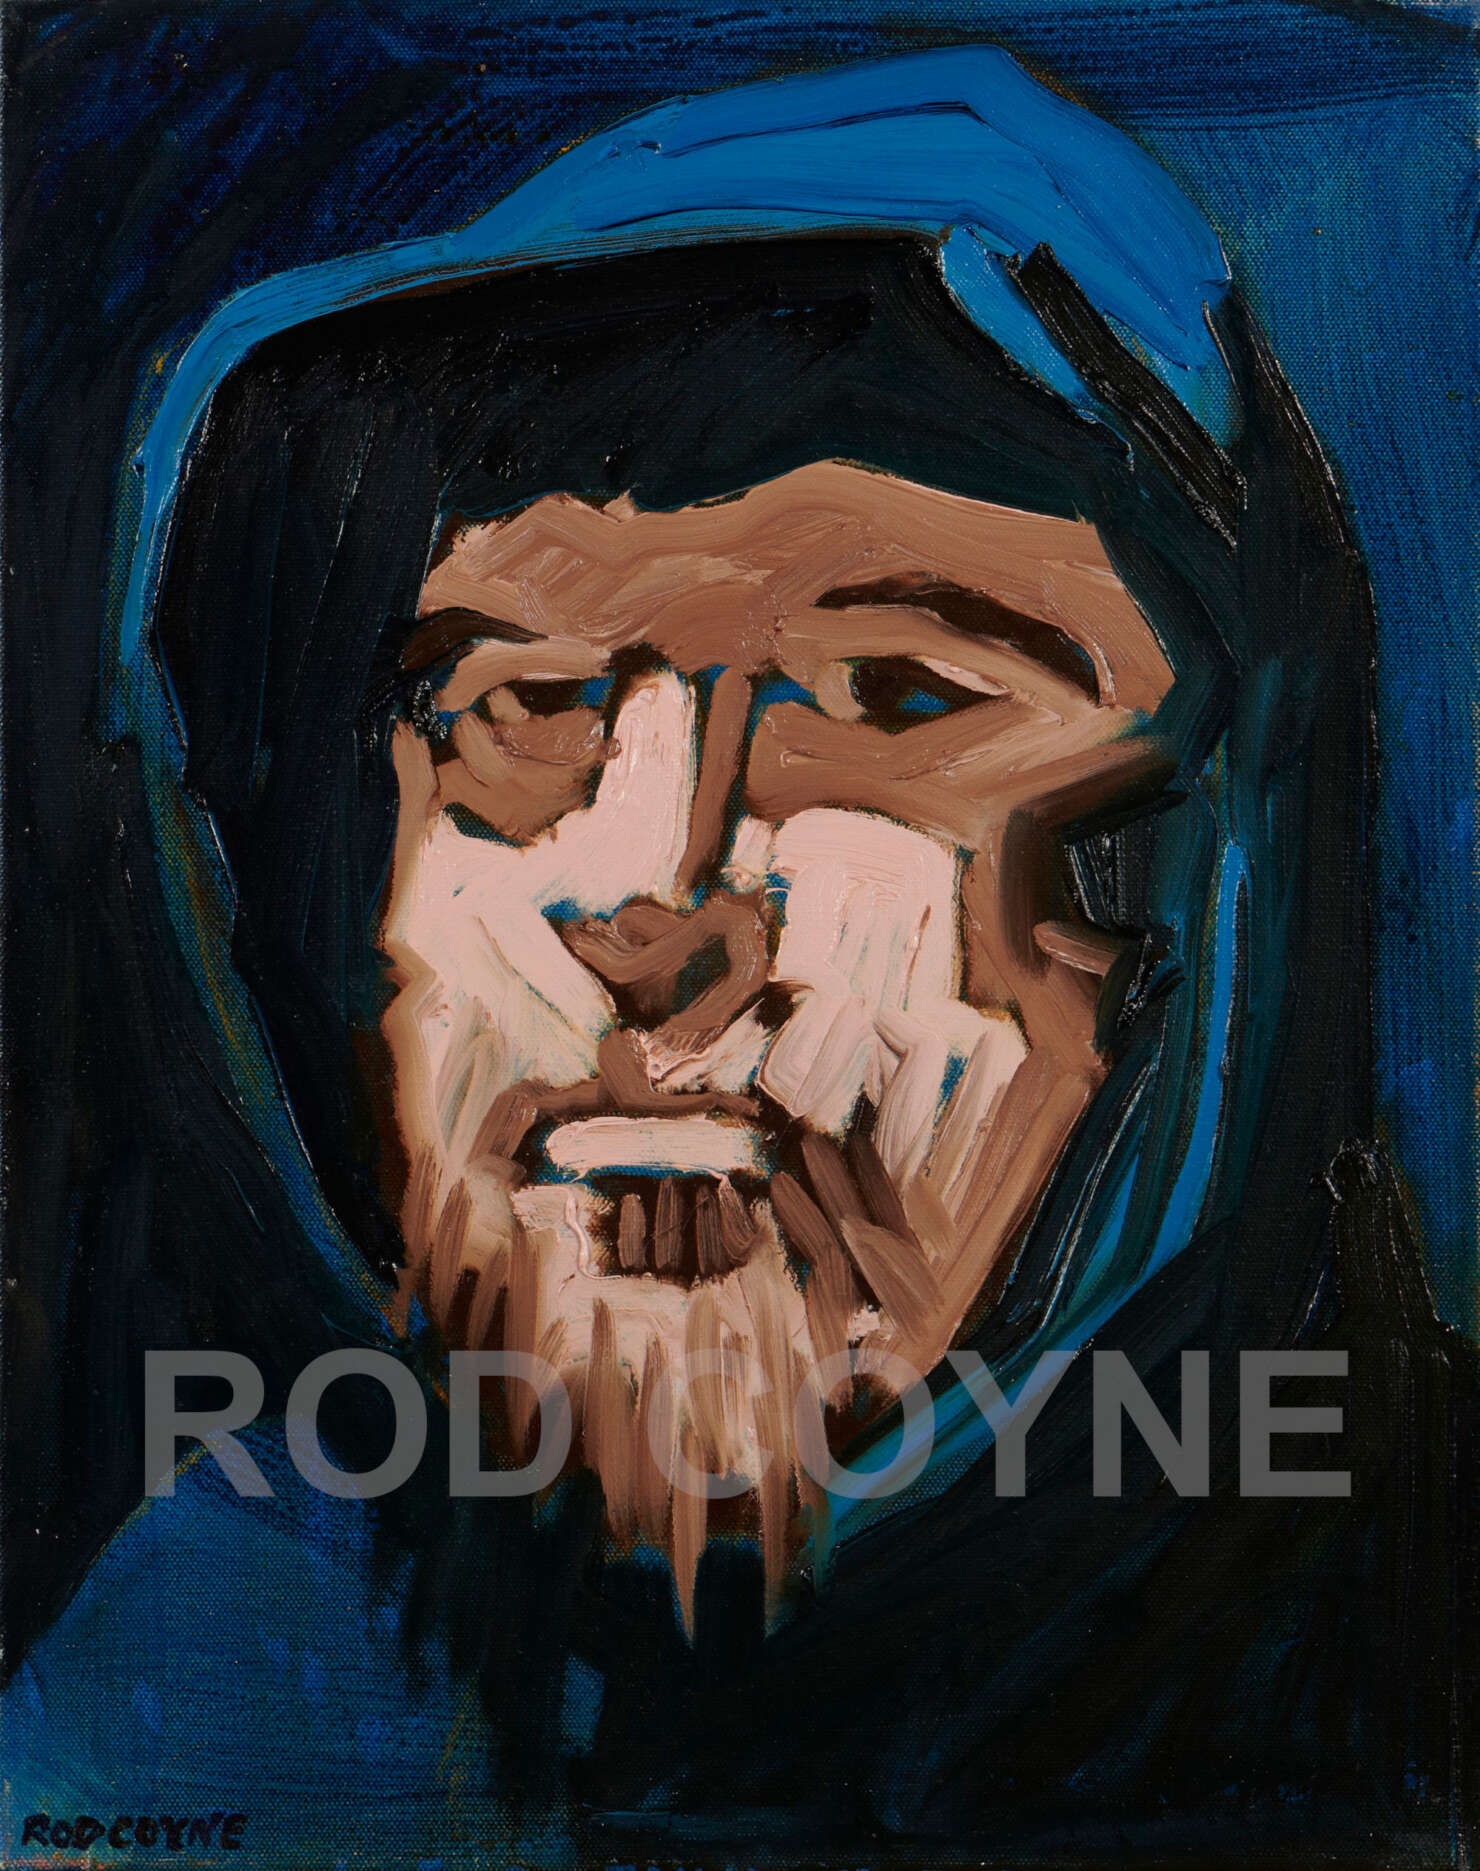 artist rod coyne's portrait "Little Pilgrim" is shown here with watermark.